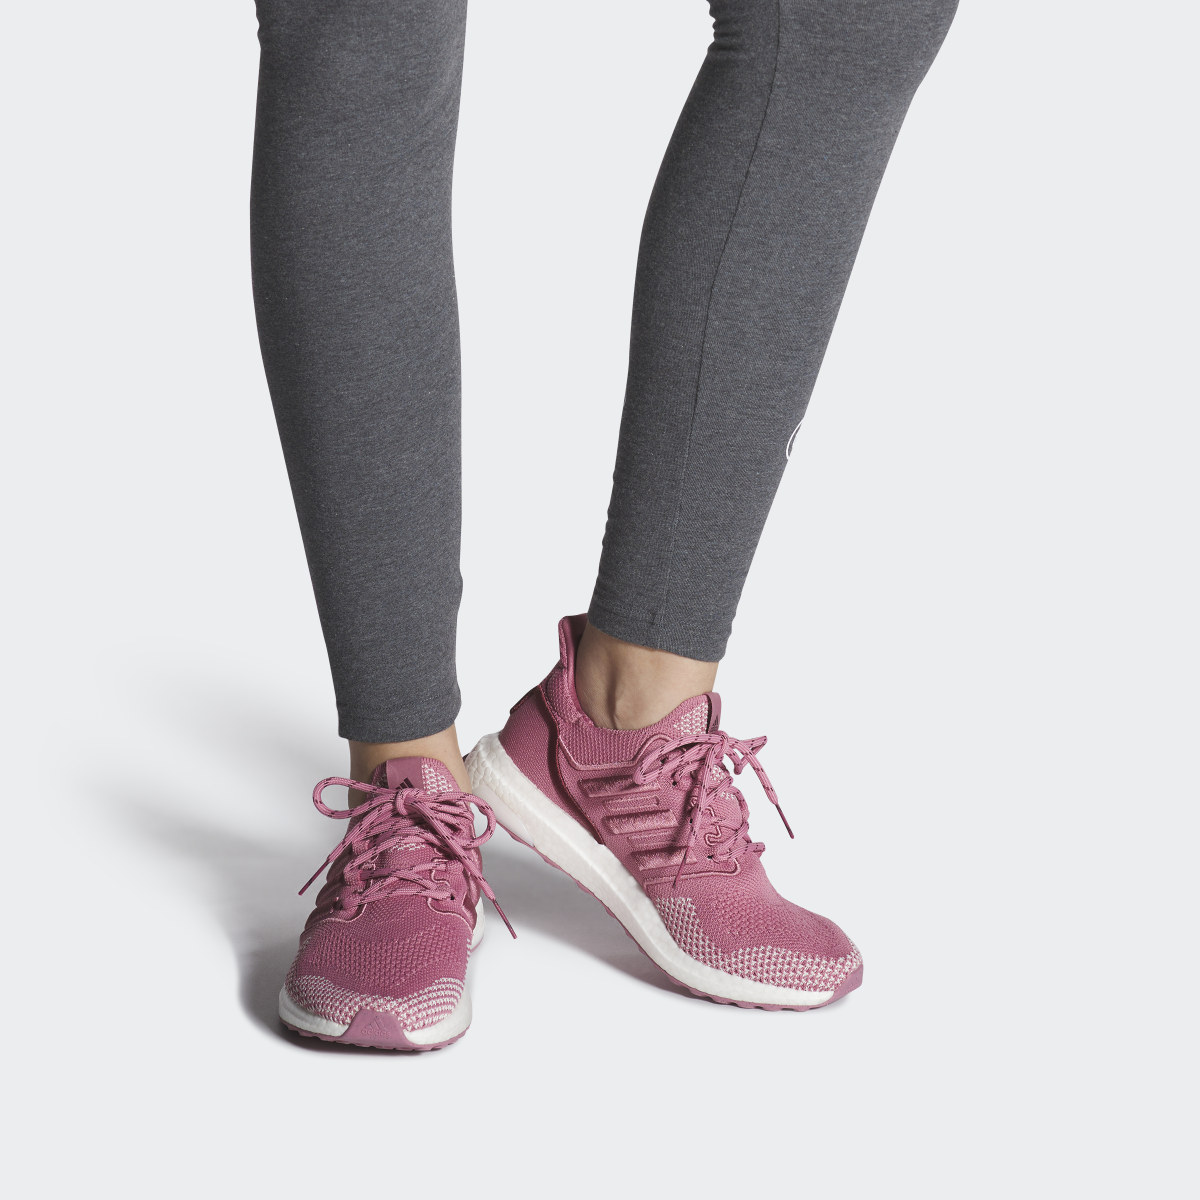 Adidas Ultraboost 1.0 Ayakkabı. 5